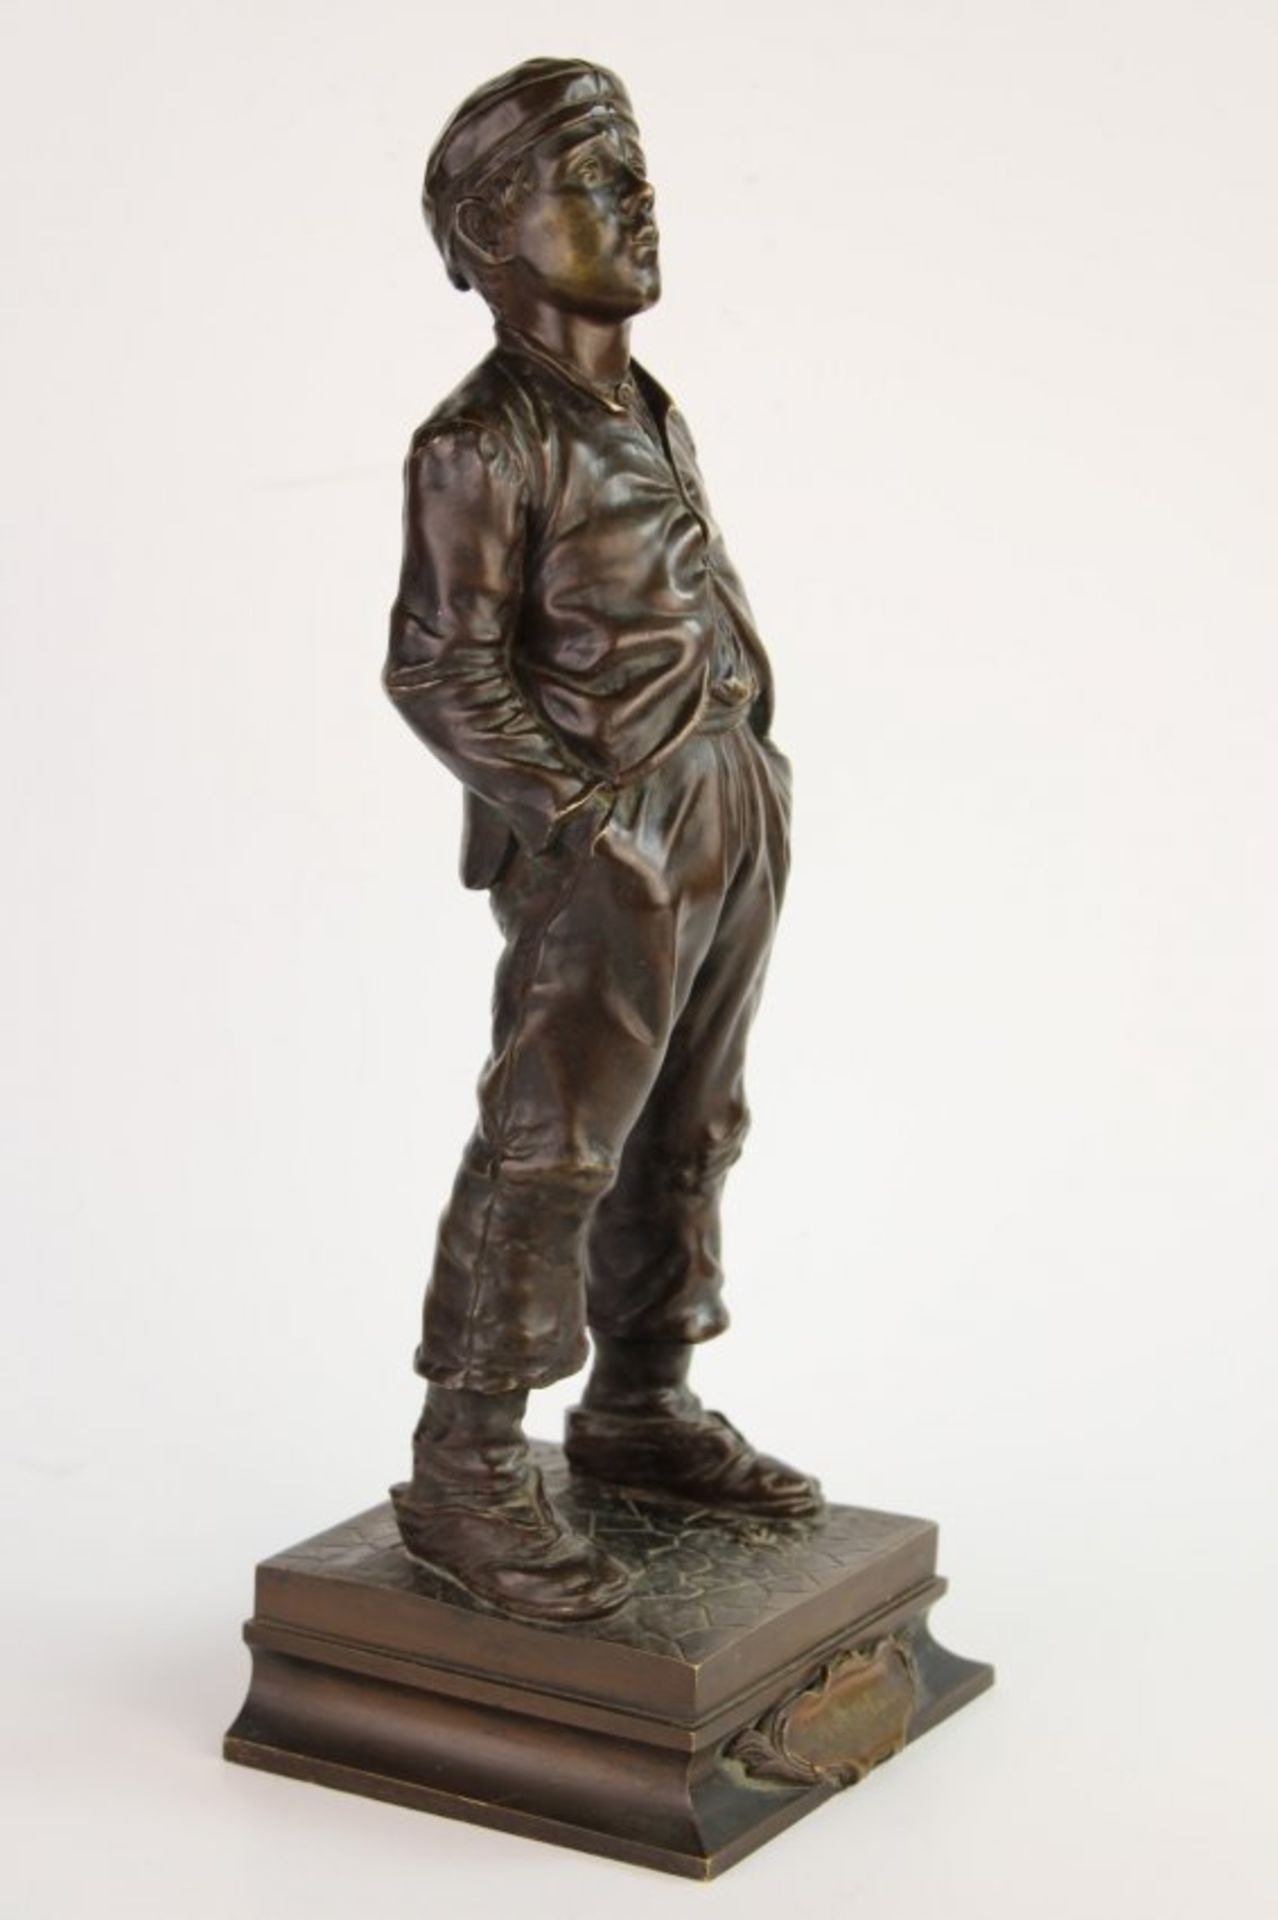 Antique H. Herzberg bronze sculpture “Whistle” - Image 2 of 3